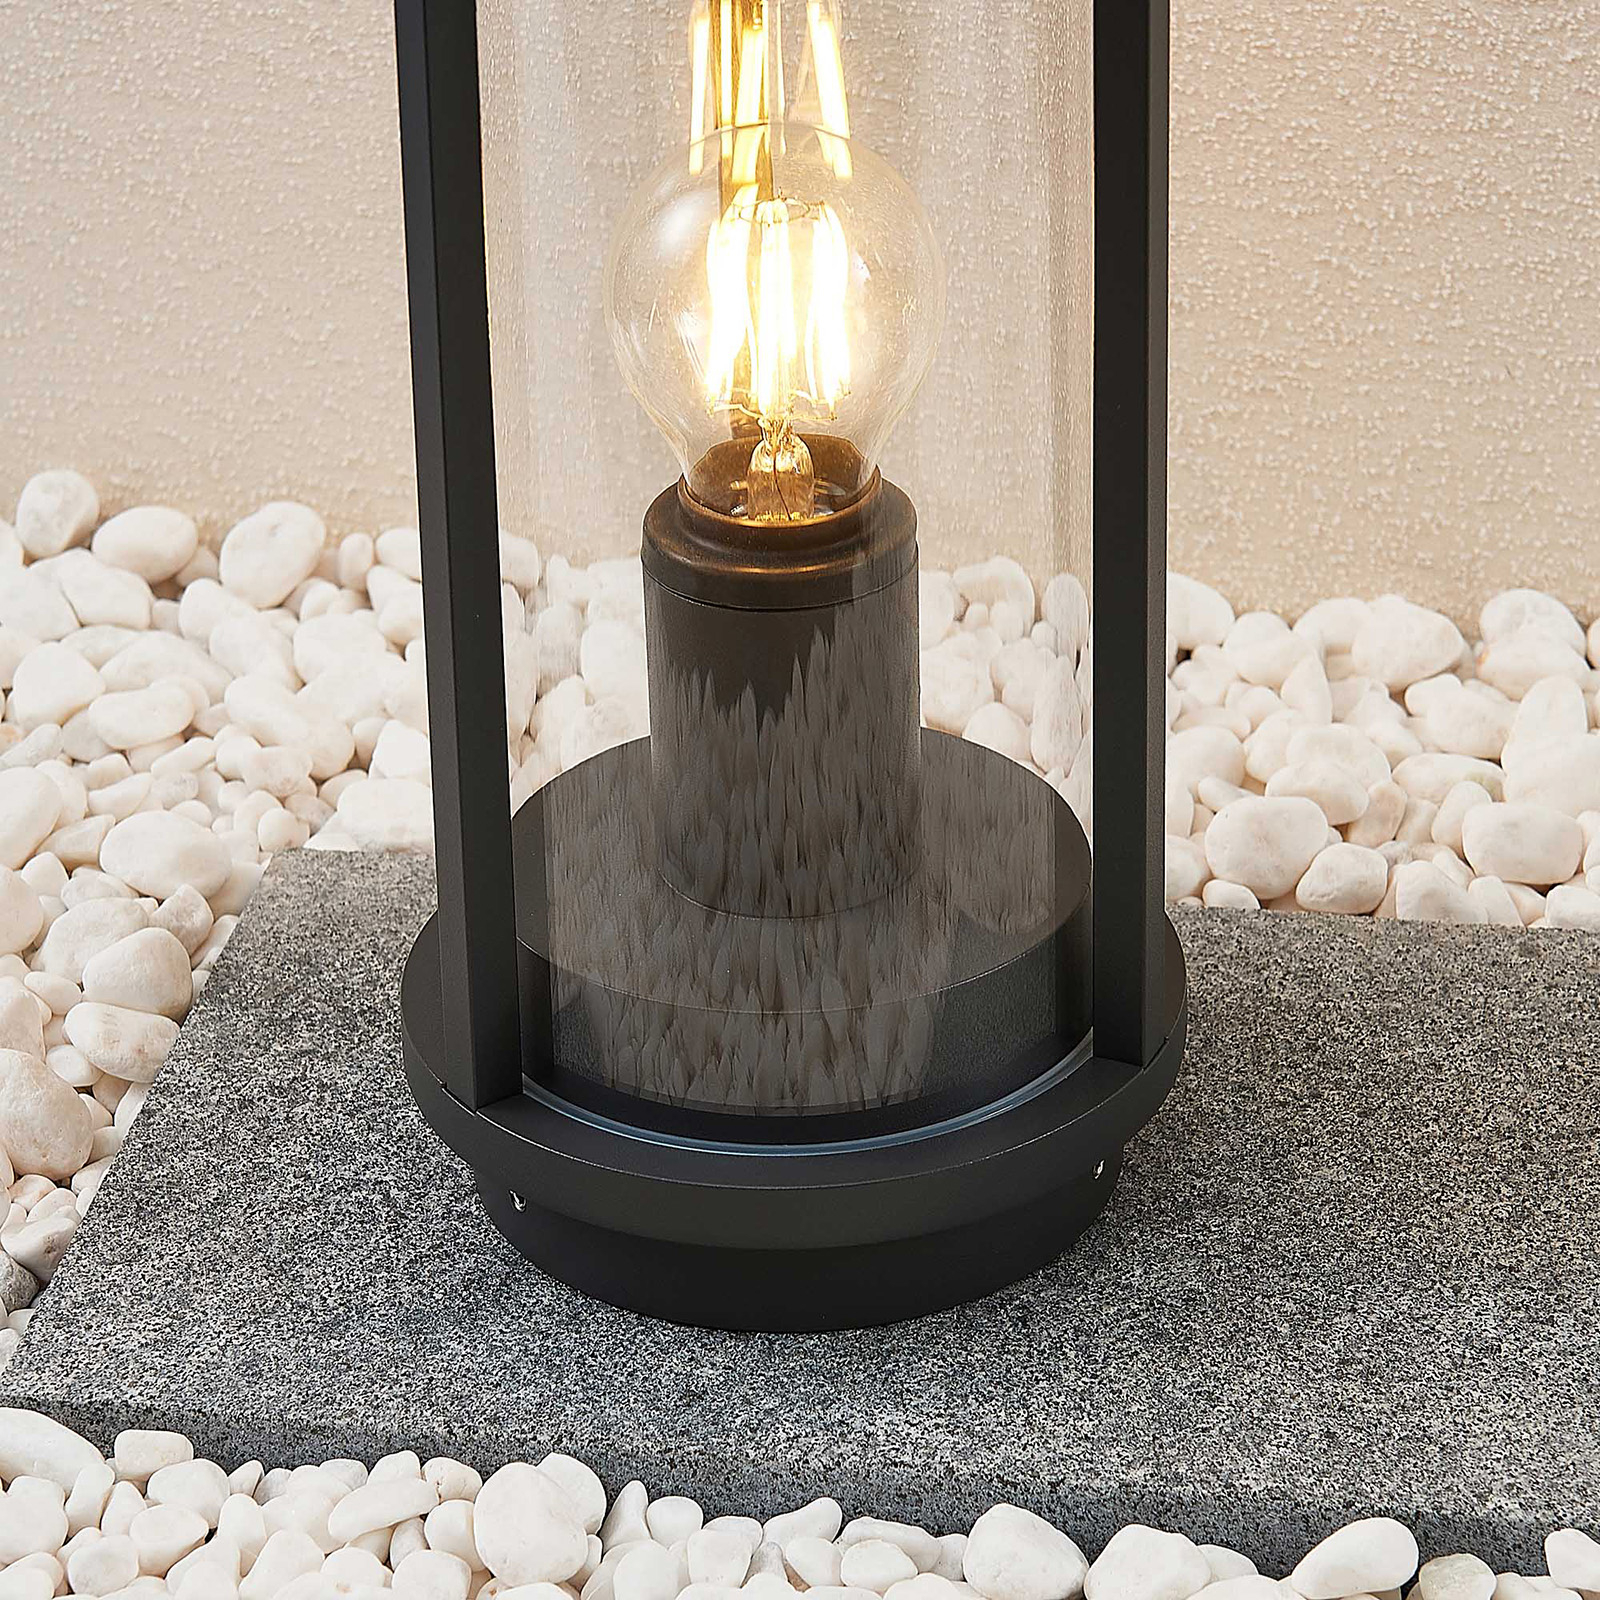 Lucande Emmeline pillar light, 34 cm high